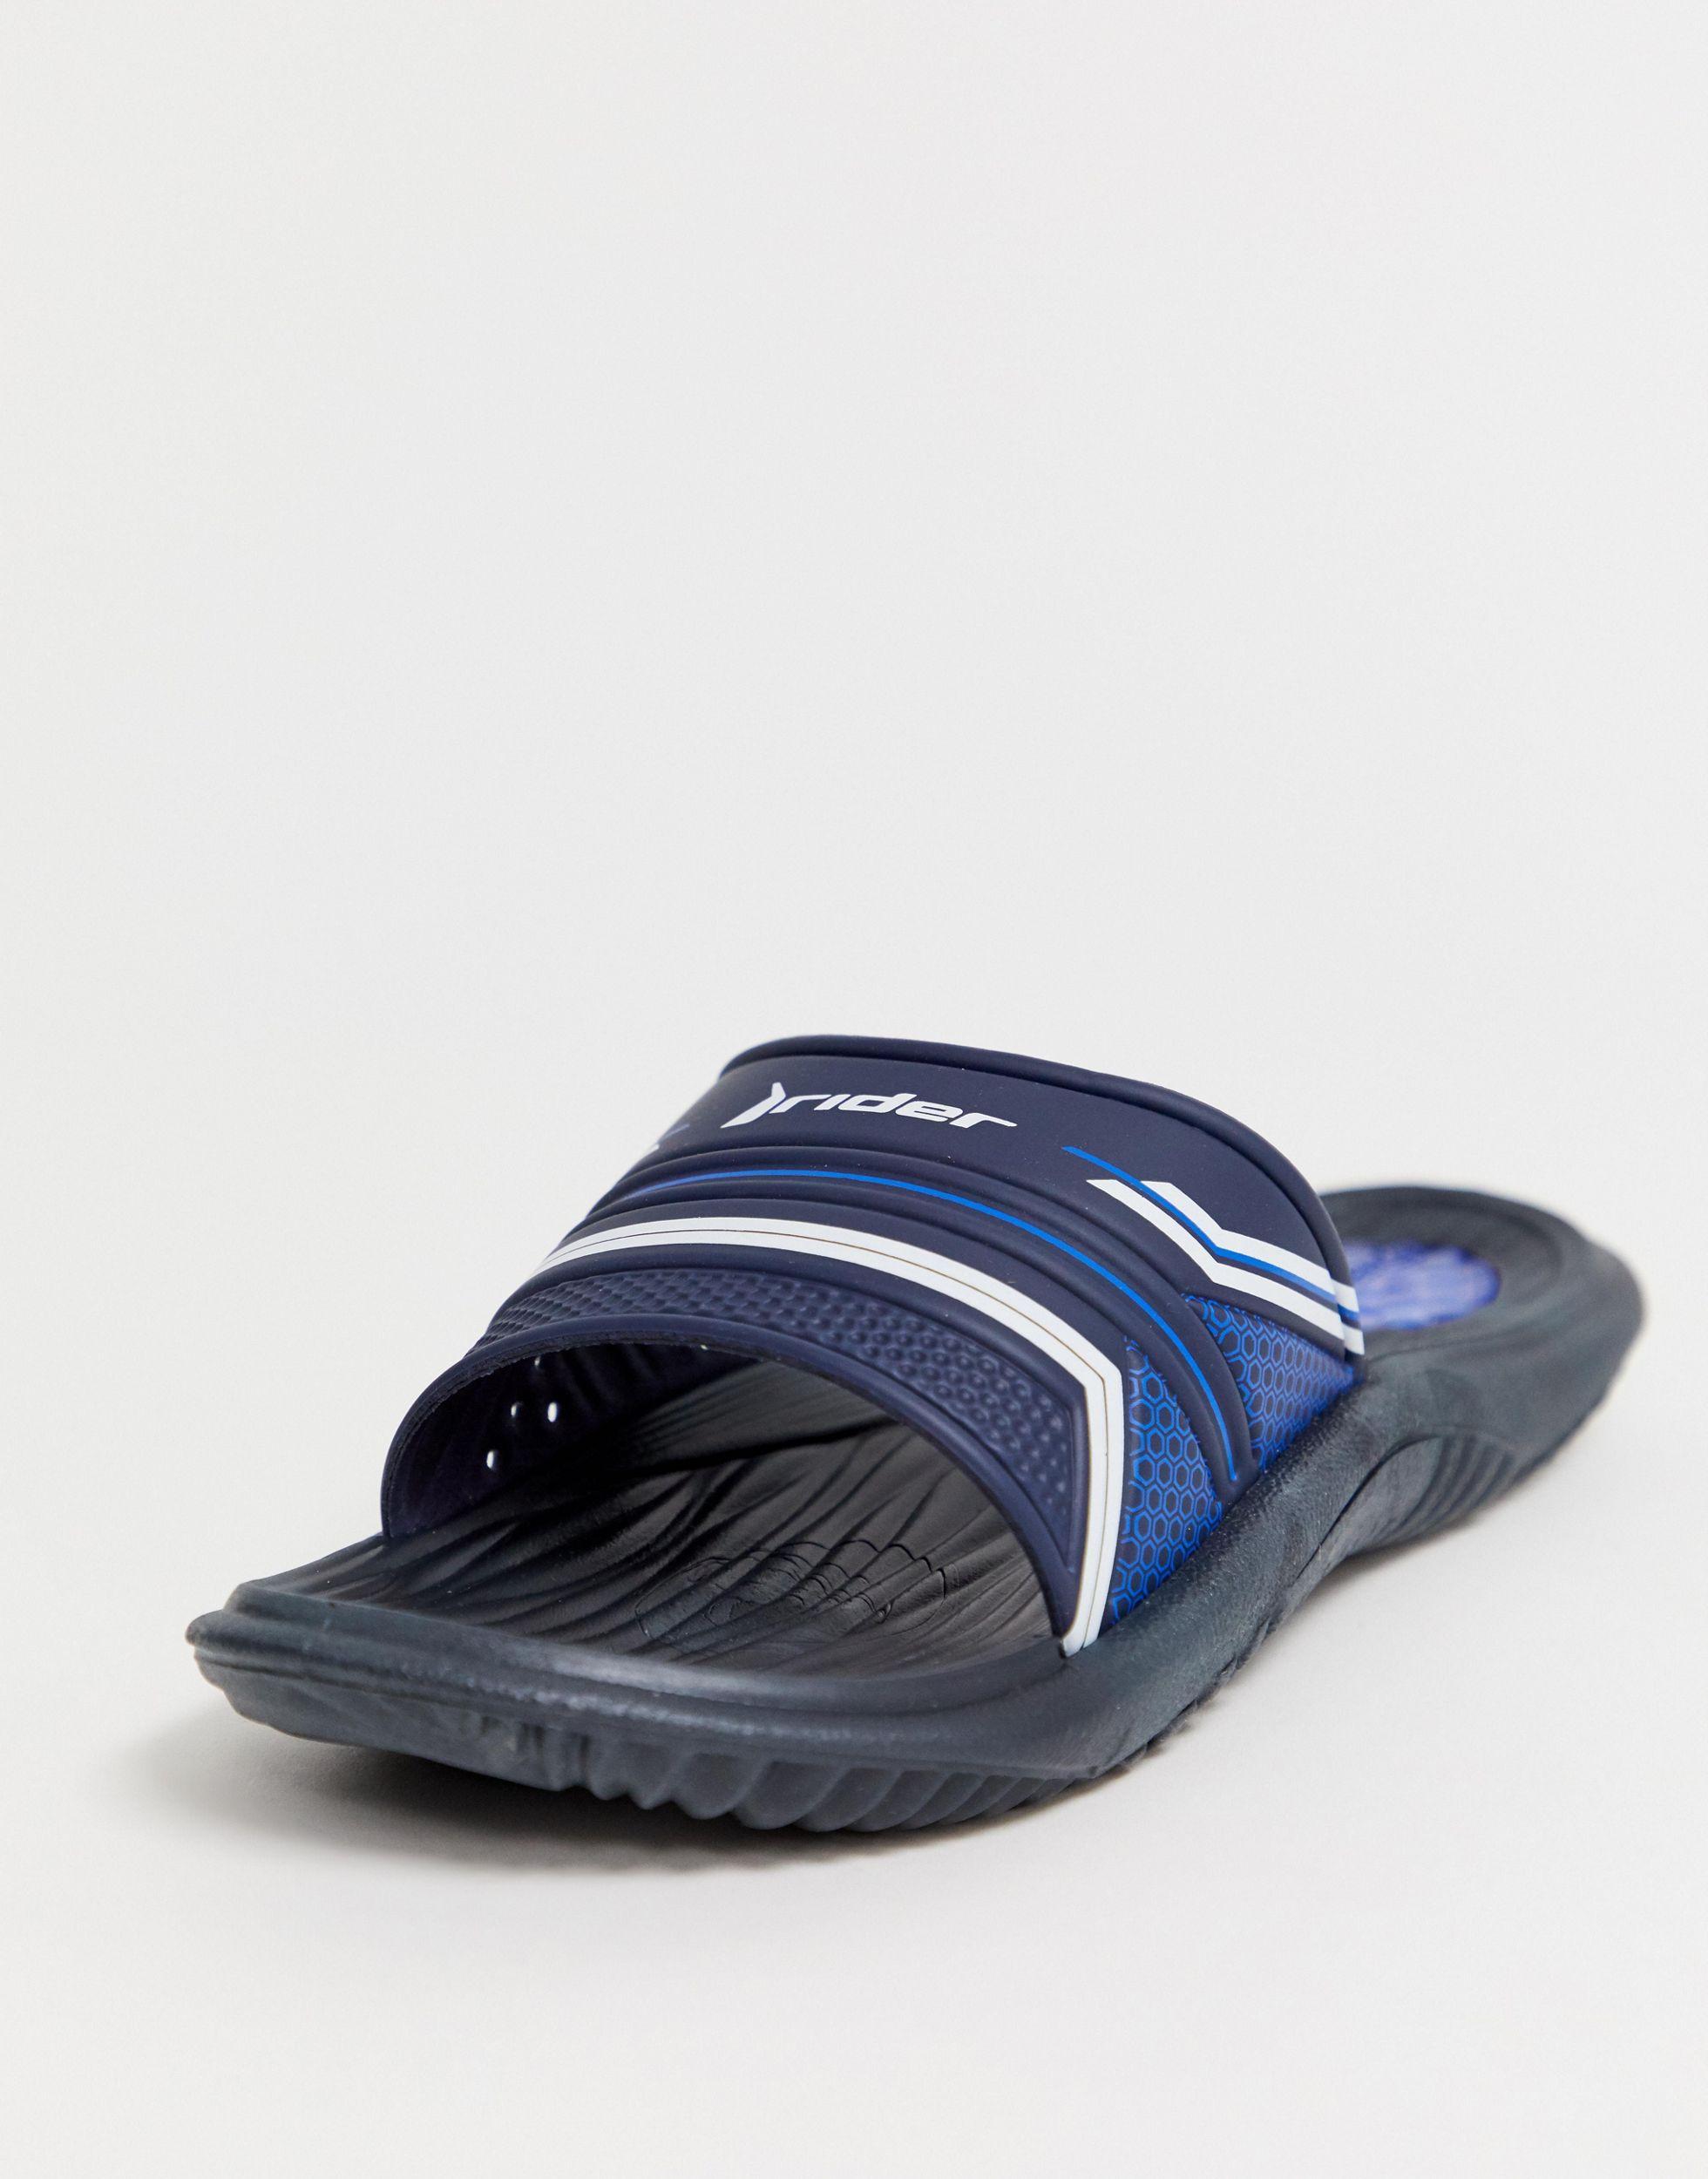 VIII A 82497 Men's Rider MONTANA 21 Slides Blue Slip On Sandals Beach Pool Shoe 